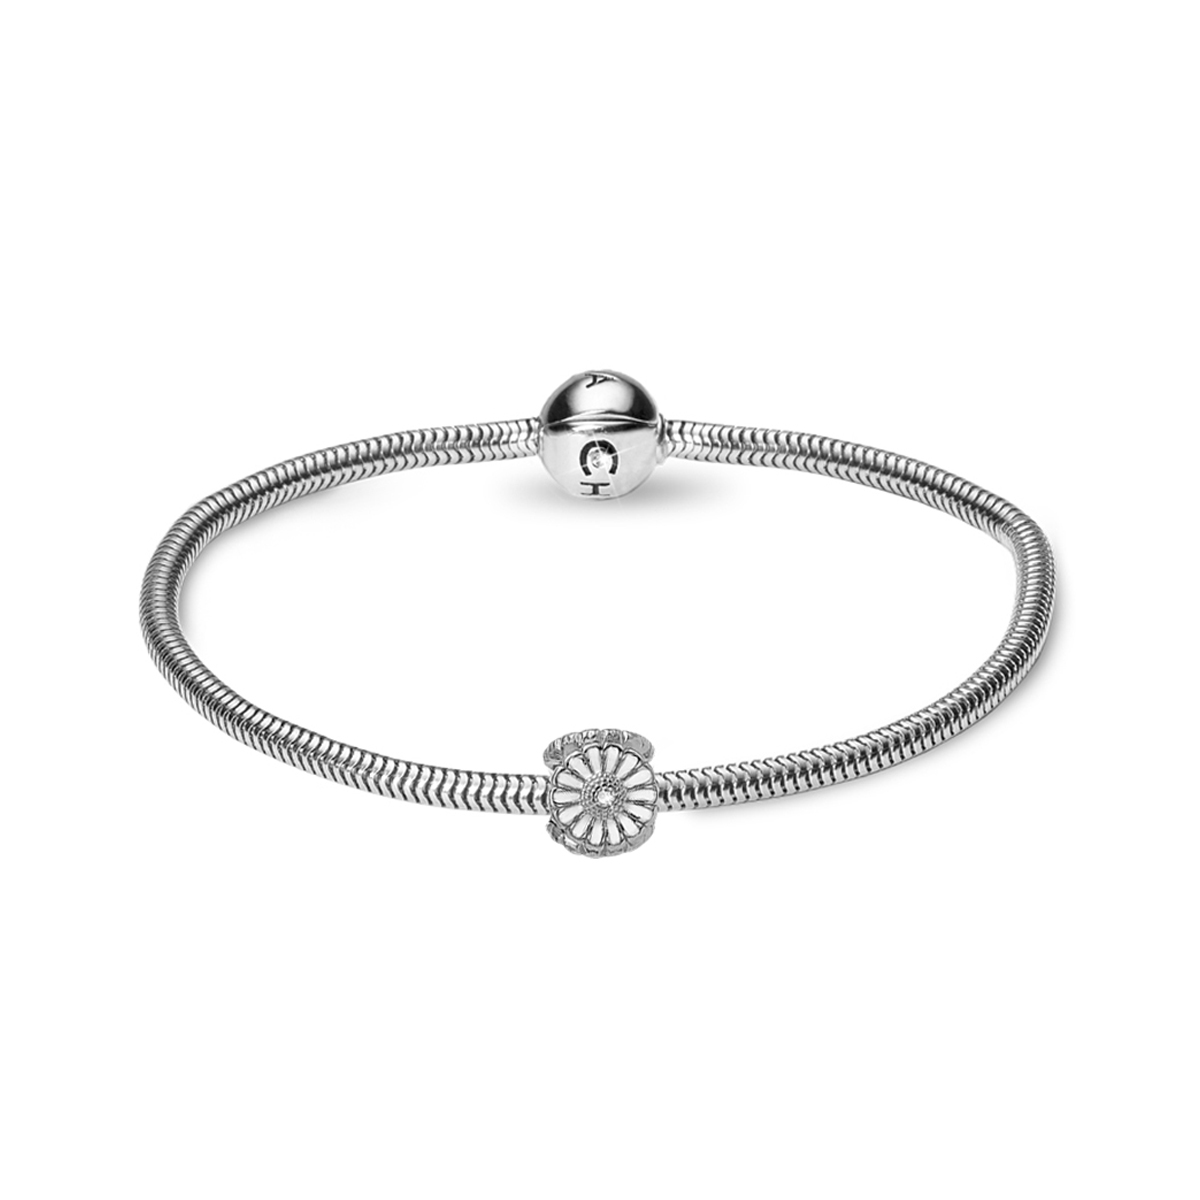 Christina Jewelry kampagne sølvarmbånd inkl. sølv margurit-charm - Christina & watches - Müllers Guldsmedje